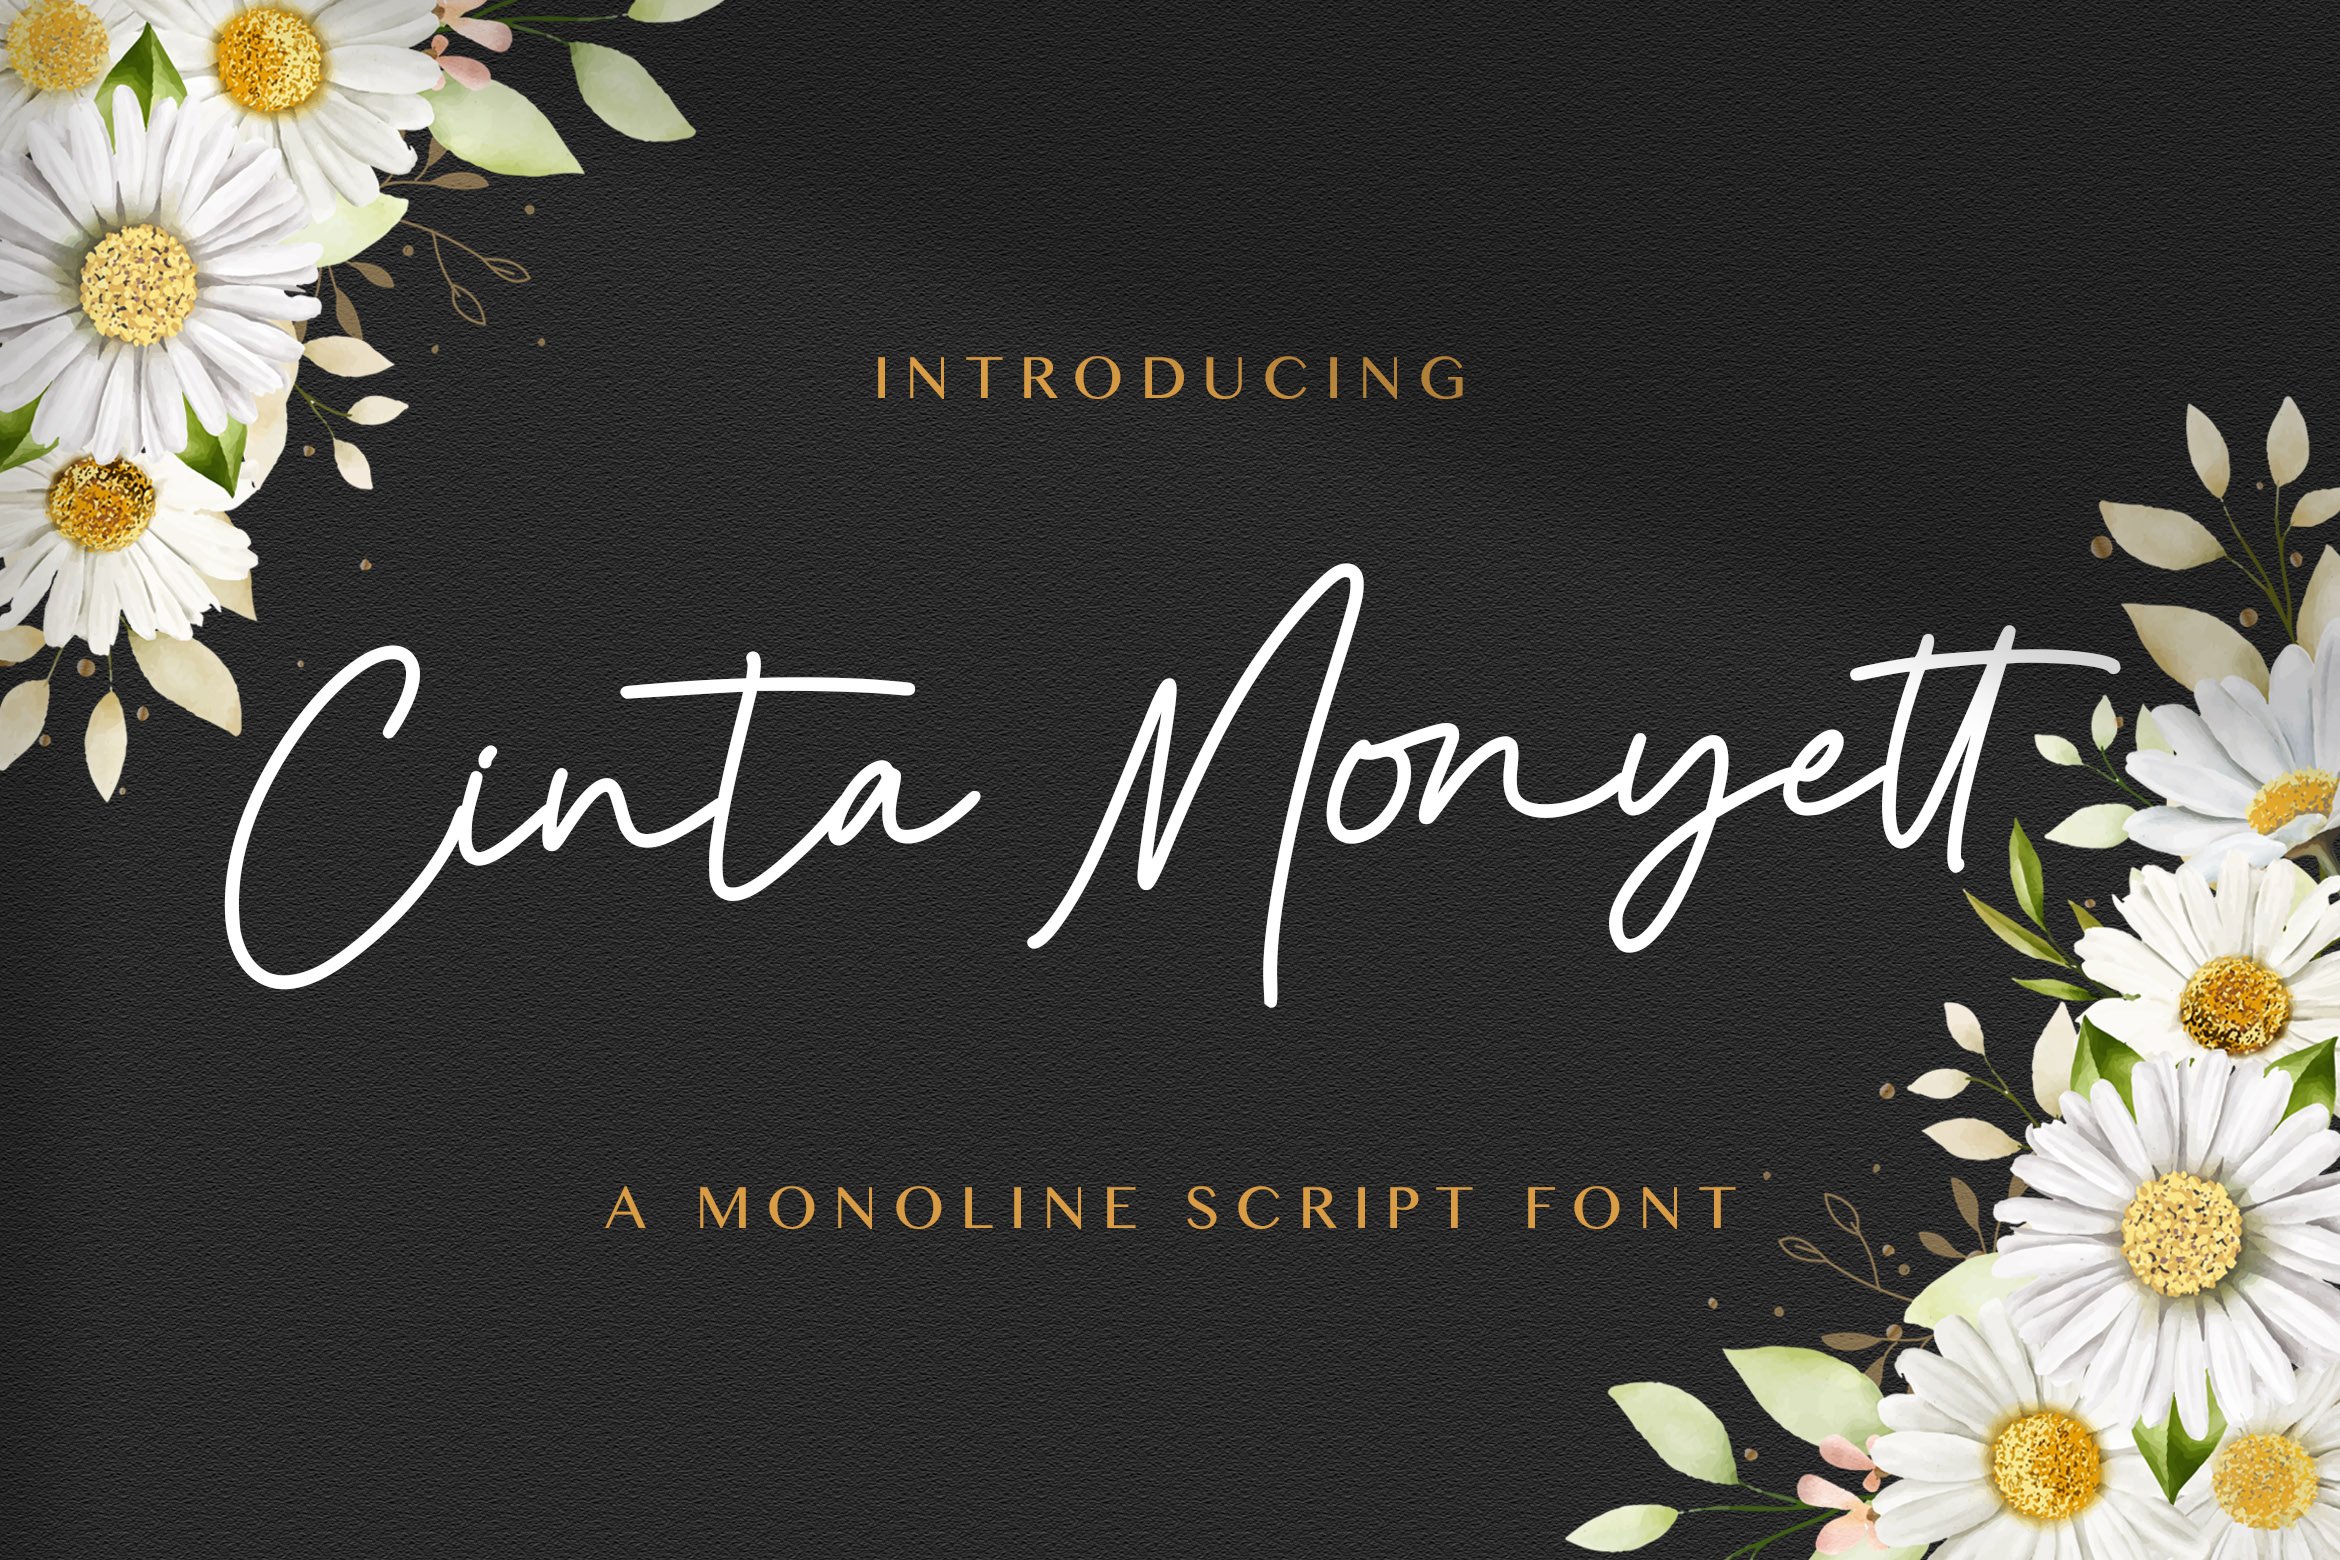 Cinta Monyett - Handwritten Font cover image.